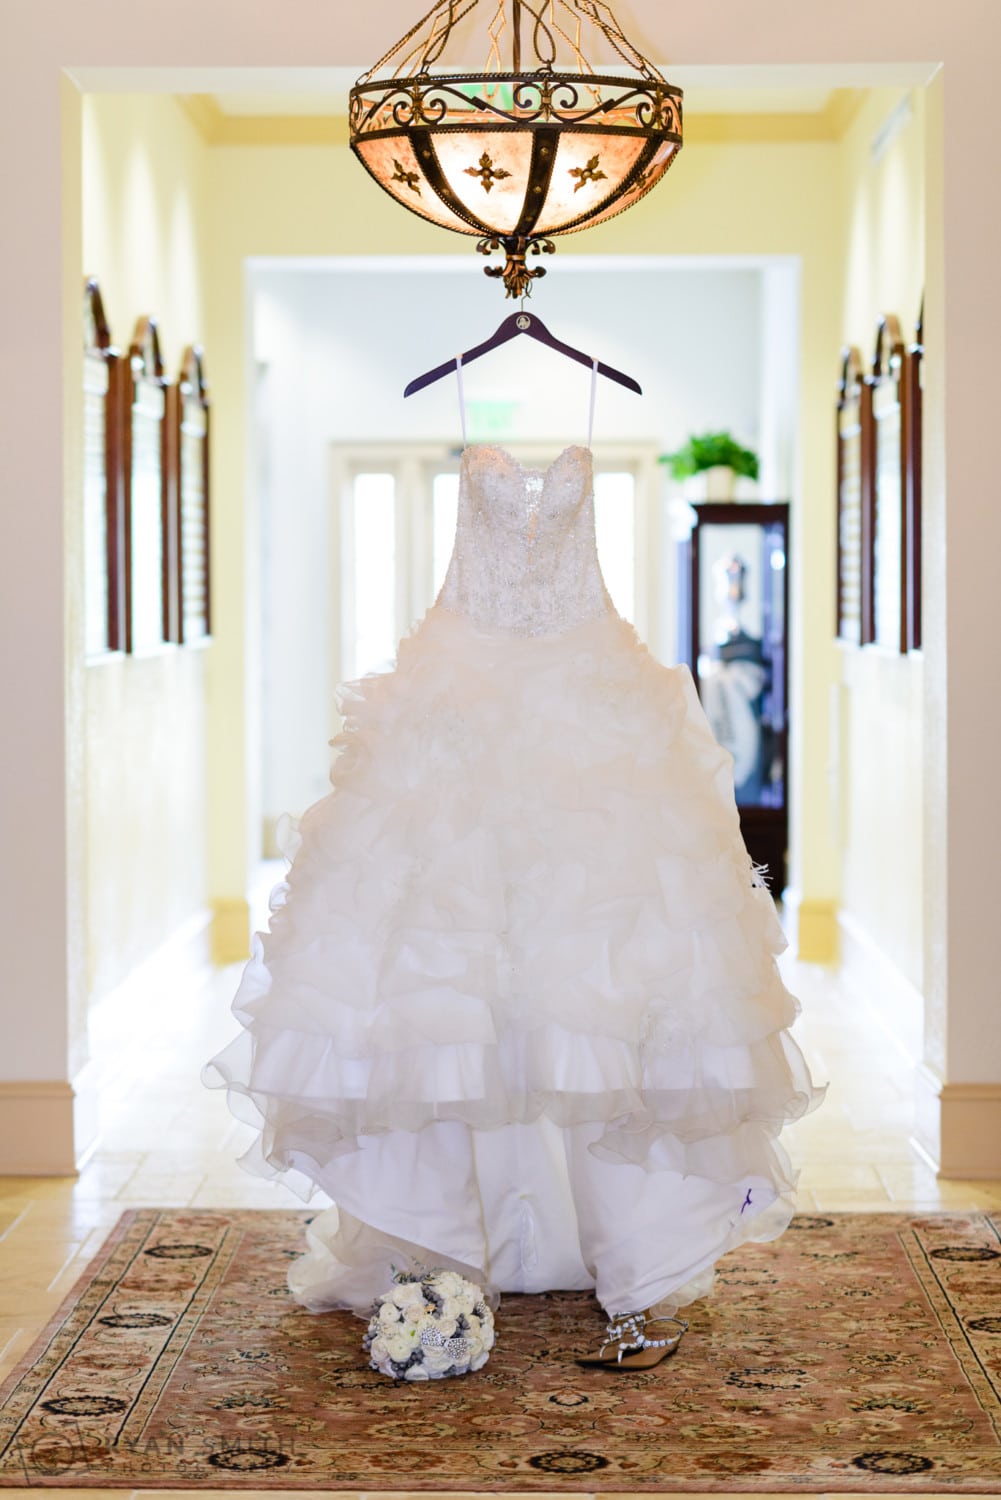 Bride's dress hanging in the hallway - Members Club at Grande Dunes